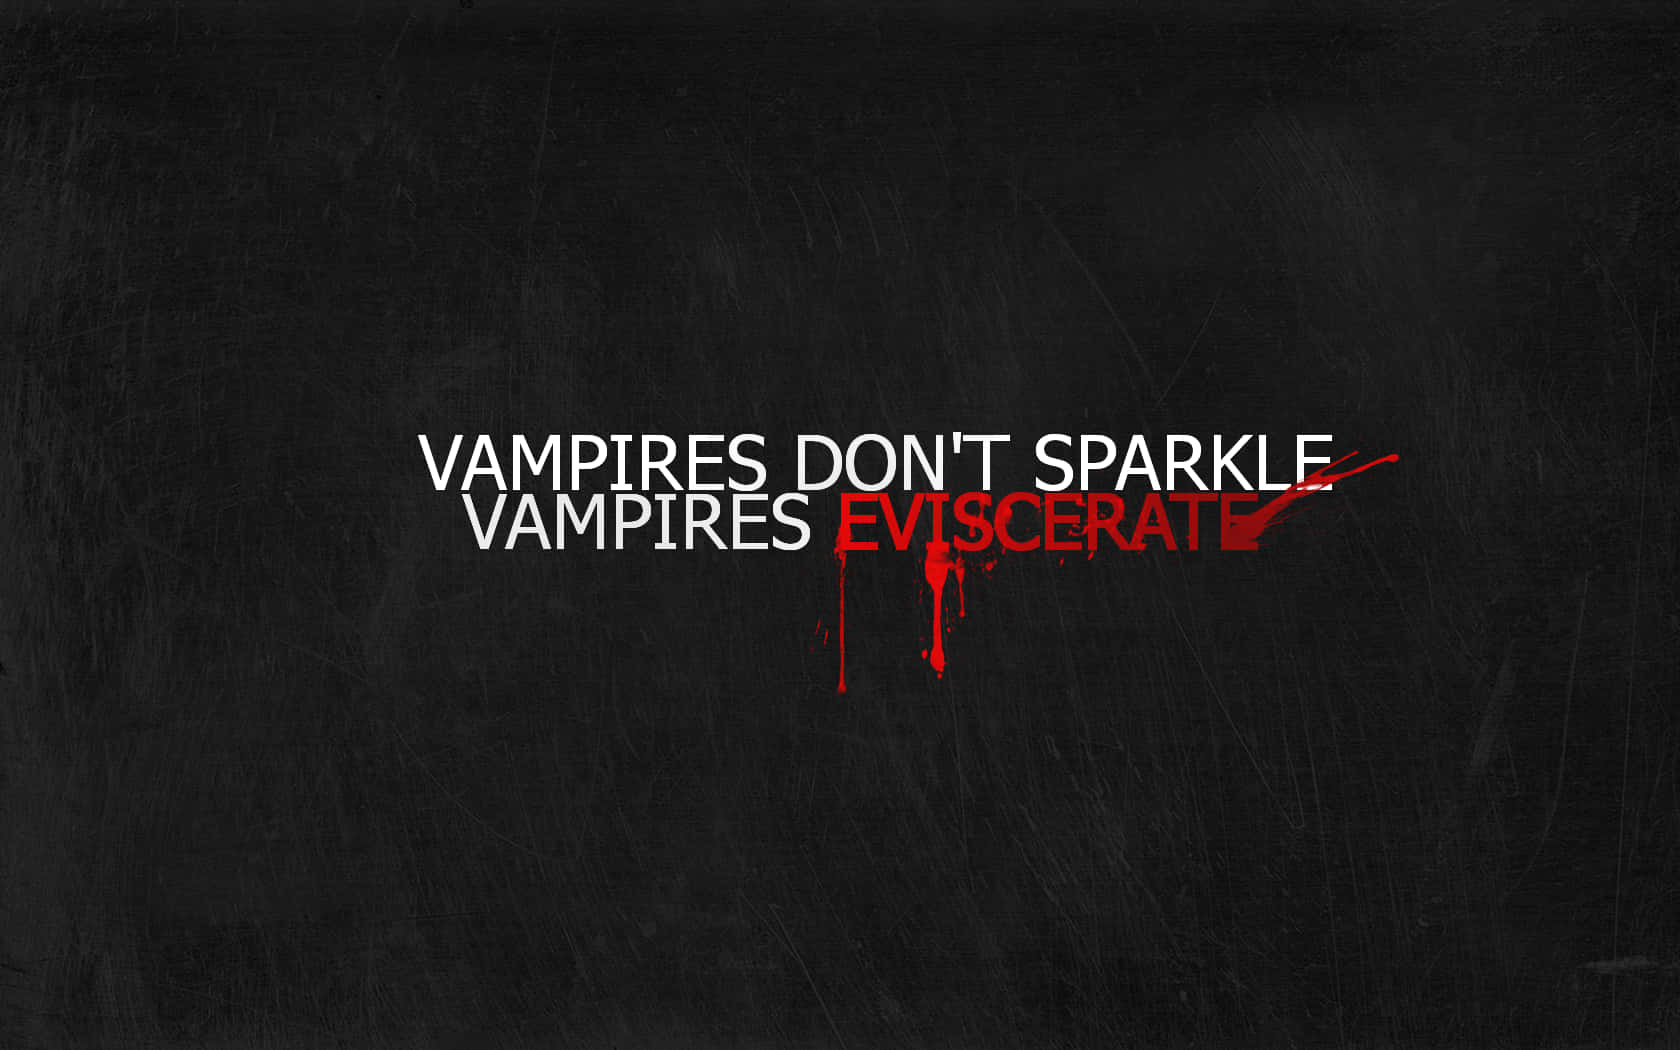 Vampires don't sparkle, they evanescence - Vampire